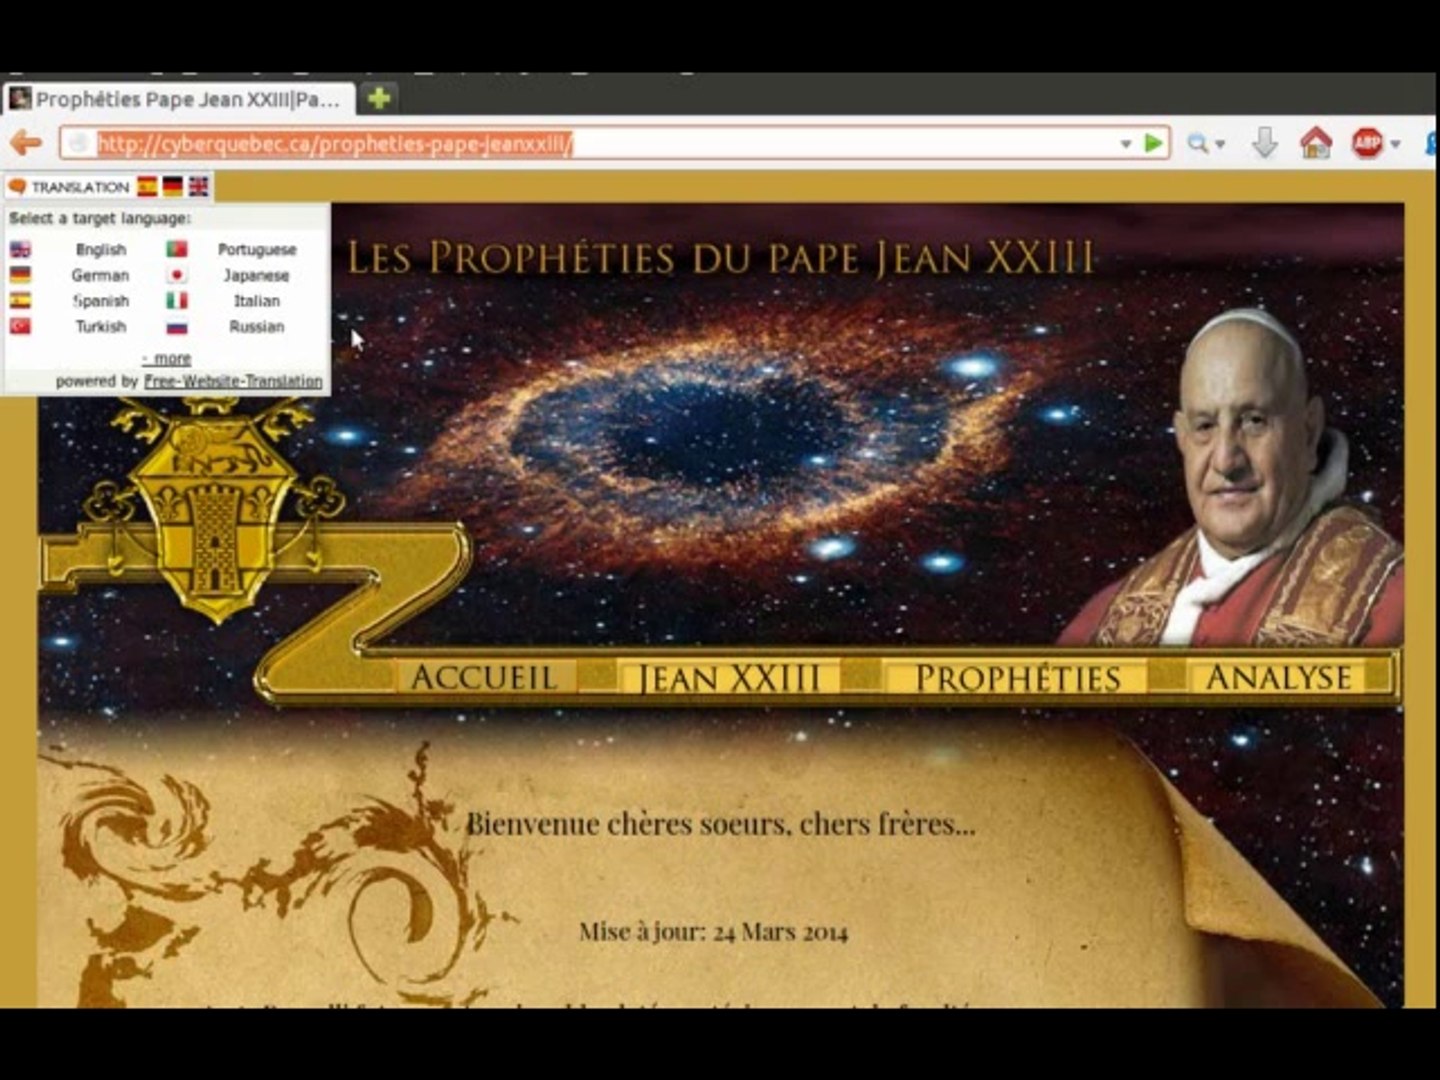 Propheties pape jean xxiii - Vidéo Dailymotion